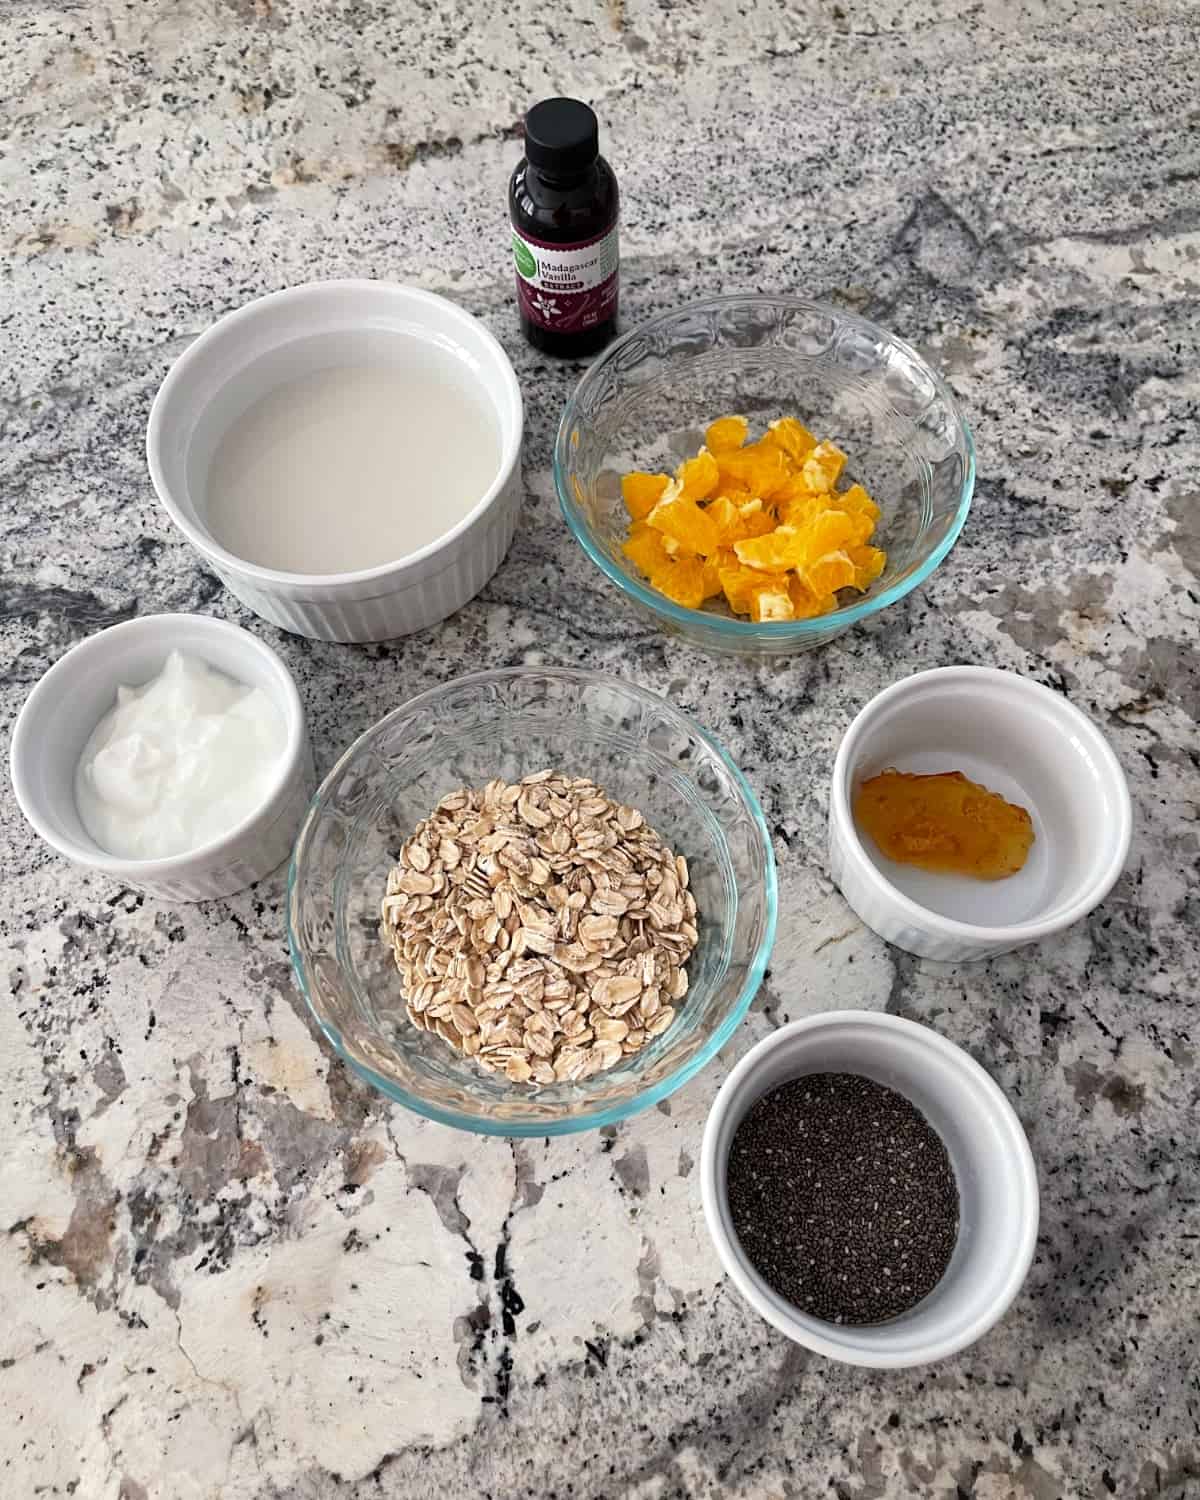 Ingredients including plain nonfat Greek yogurt, almond milk, vanilla extract, chopped orange, rolled oats, orange marmalade and chia seeds on granite counter.